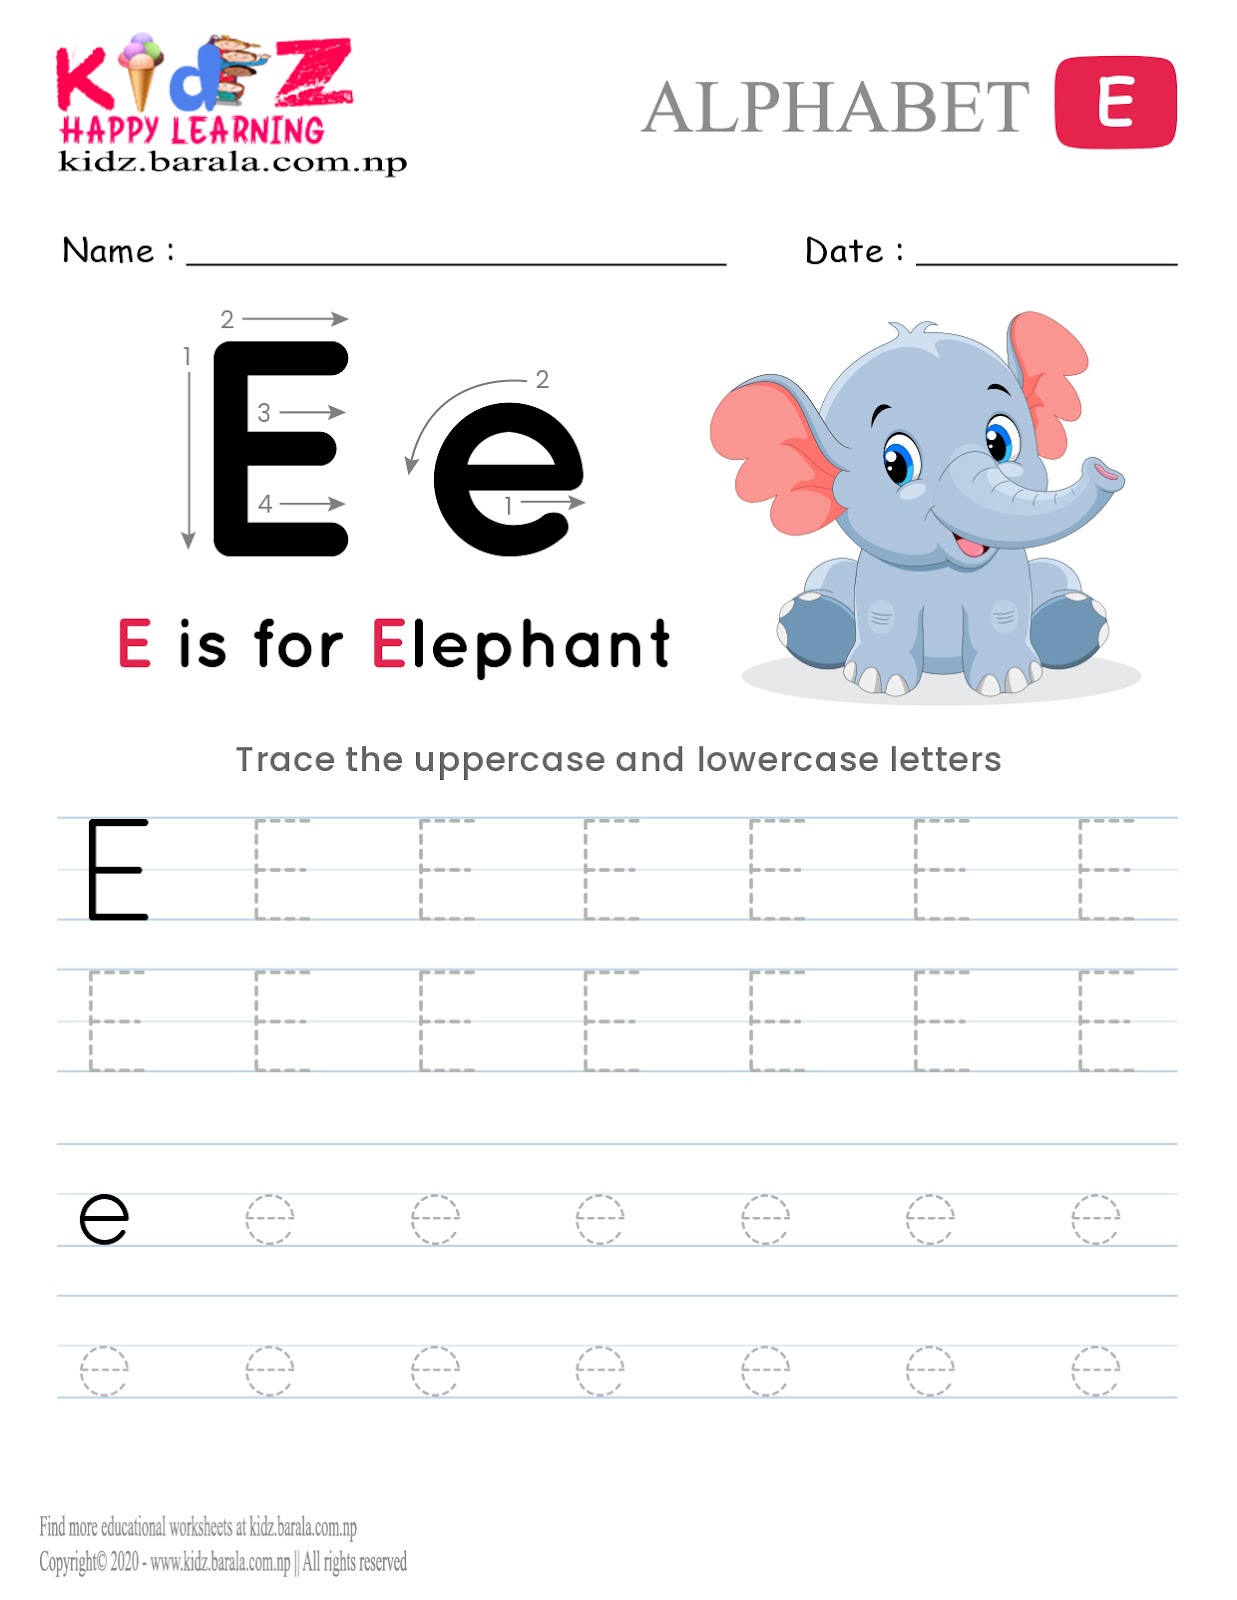 Alphabet E tracing worksheet free download .pdf